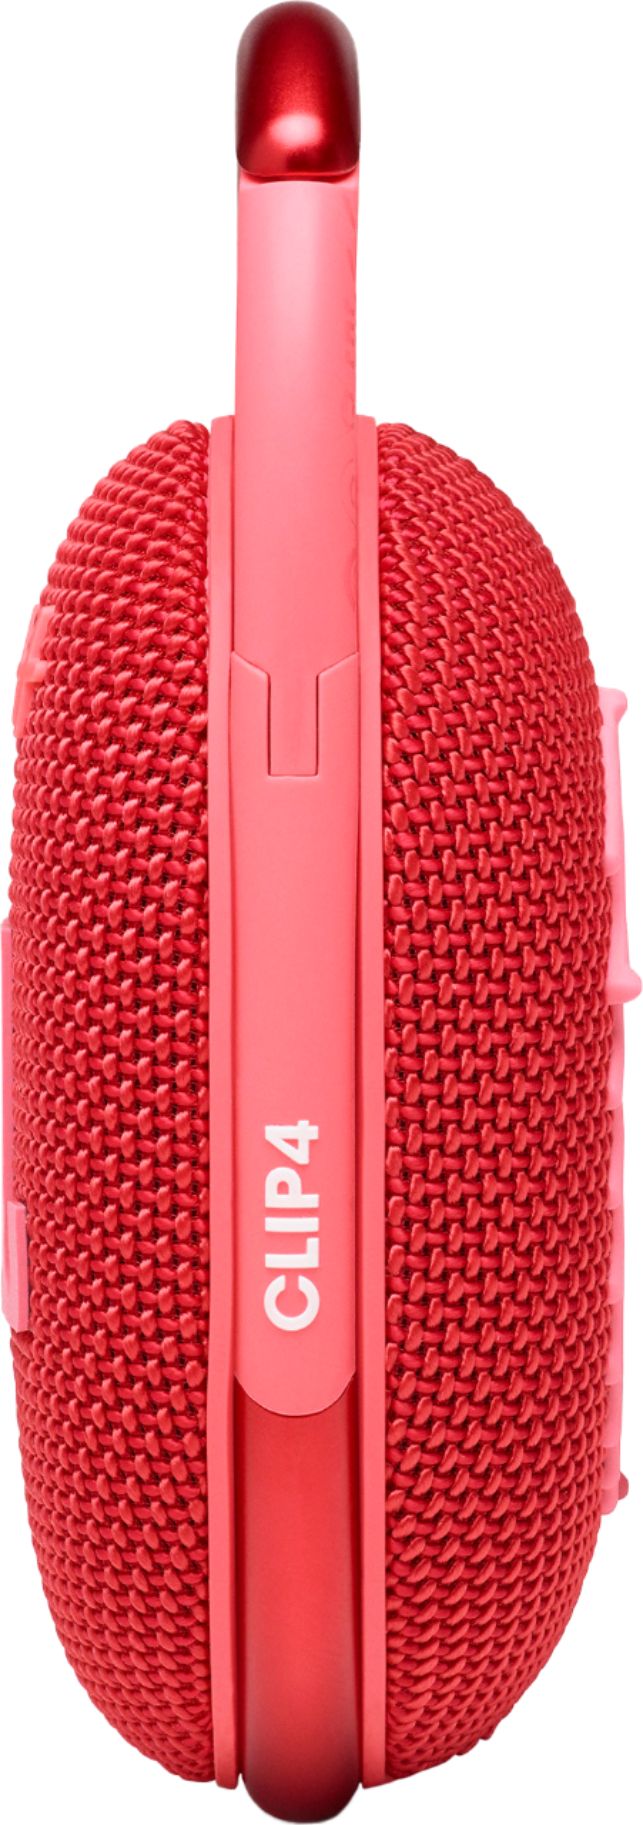 JBL CLIP4 Portable Bluetooth Speaker Red JBLCLIP4REDAM - Best Buy